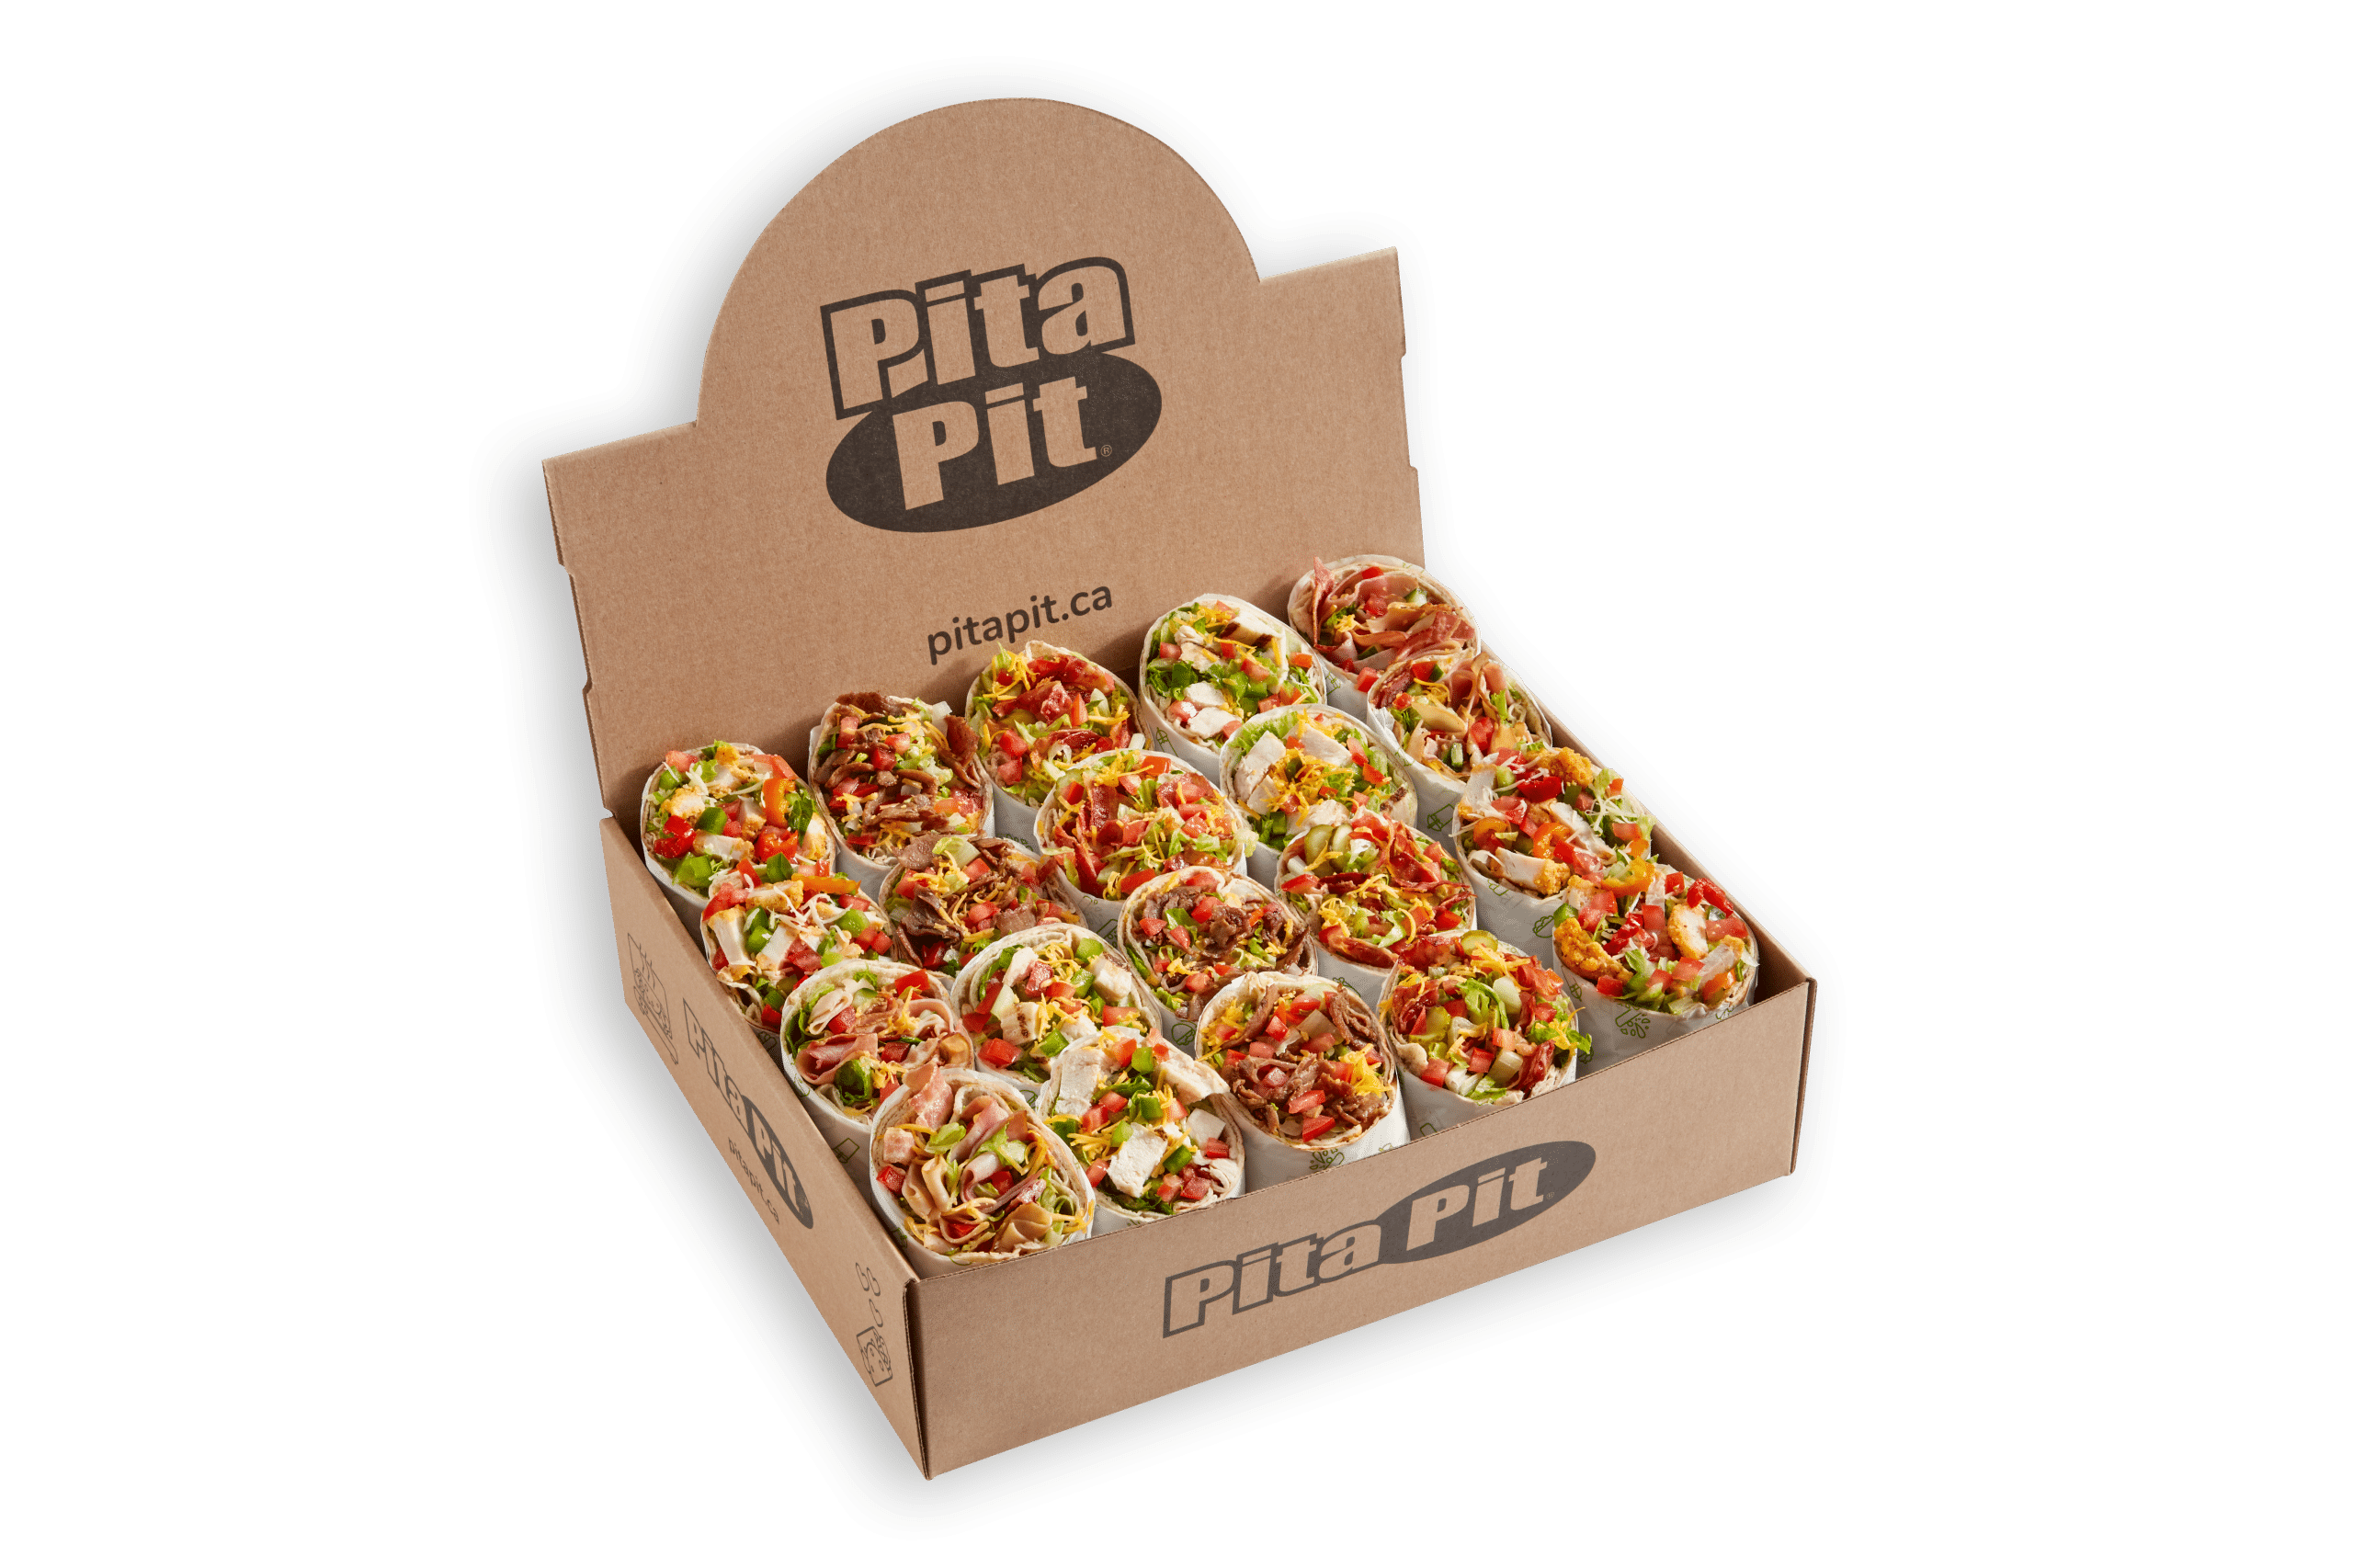 Meet lover box - Pita pit